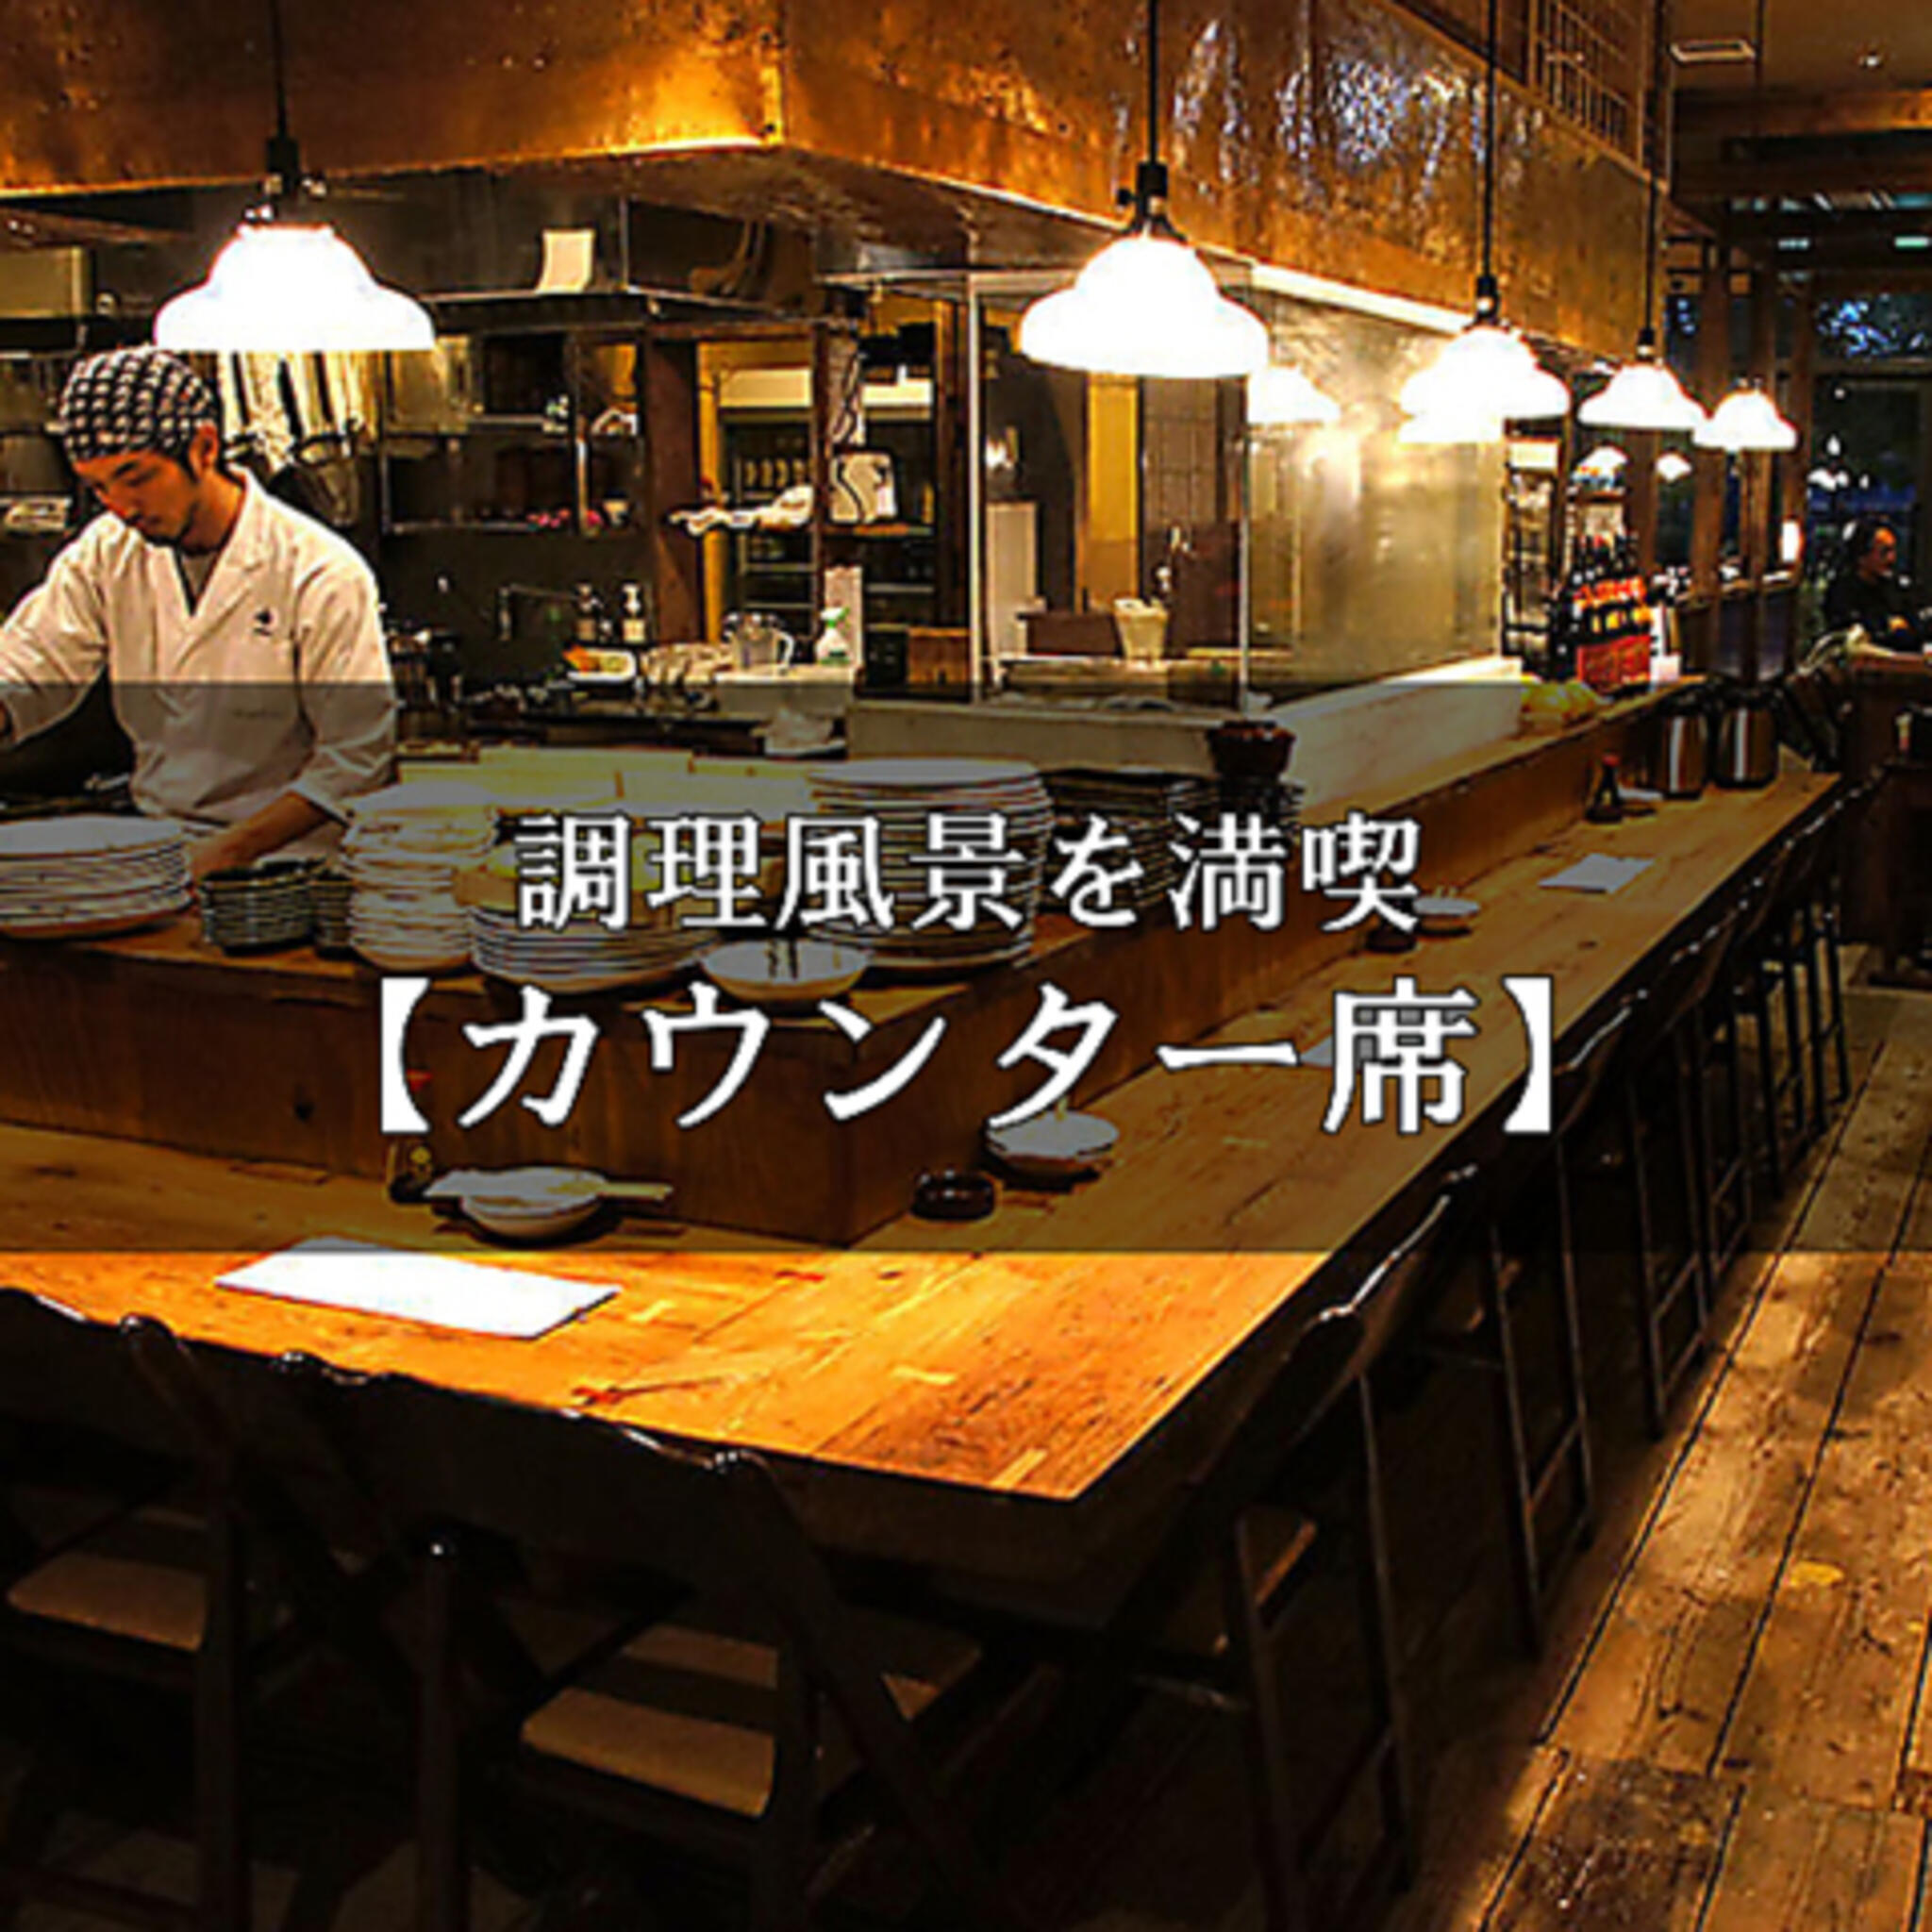 菊松食堂の代表写真4